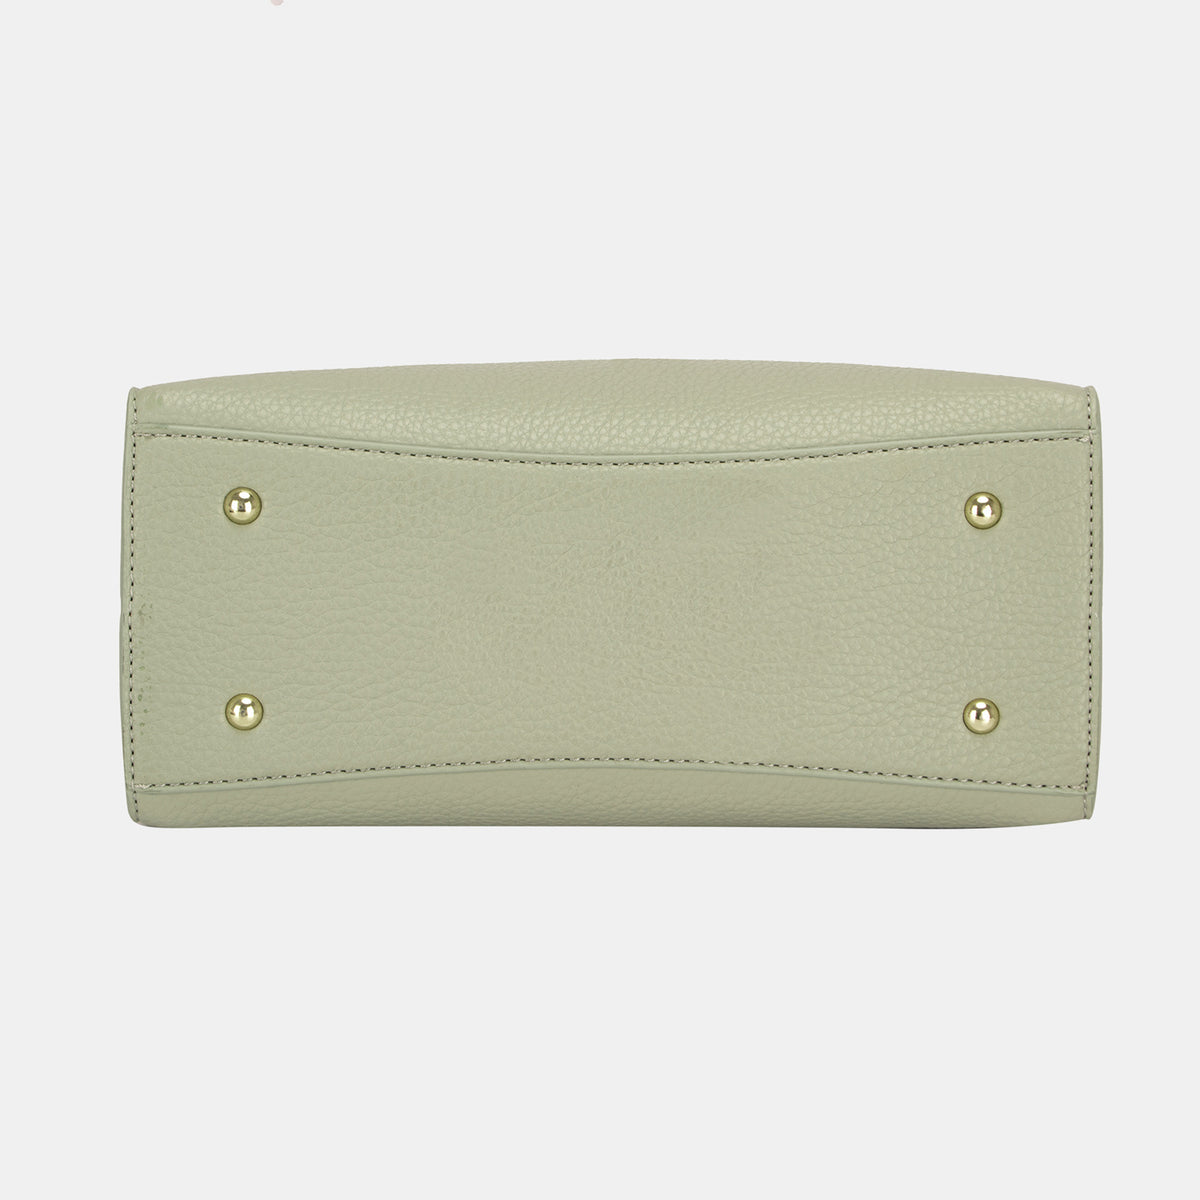 [David Jones] PU Leather Medium Handbag